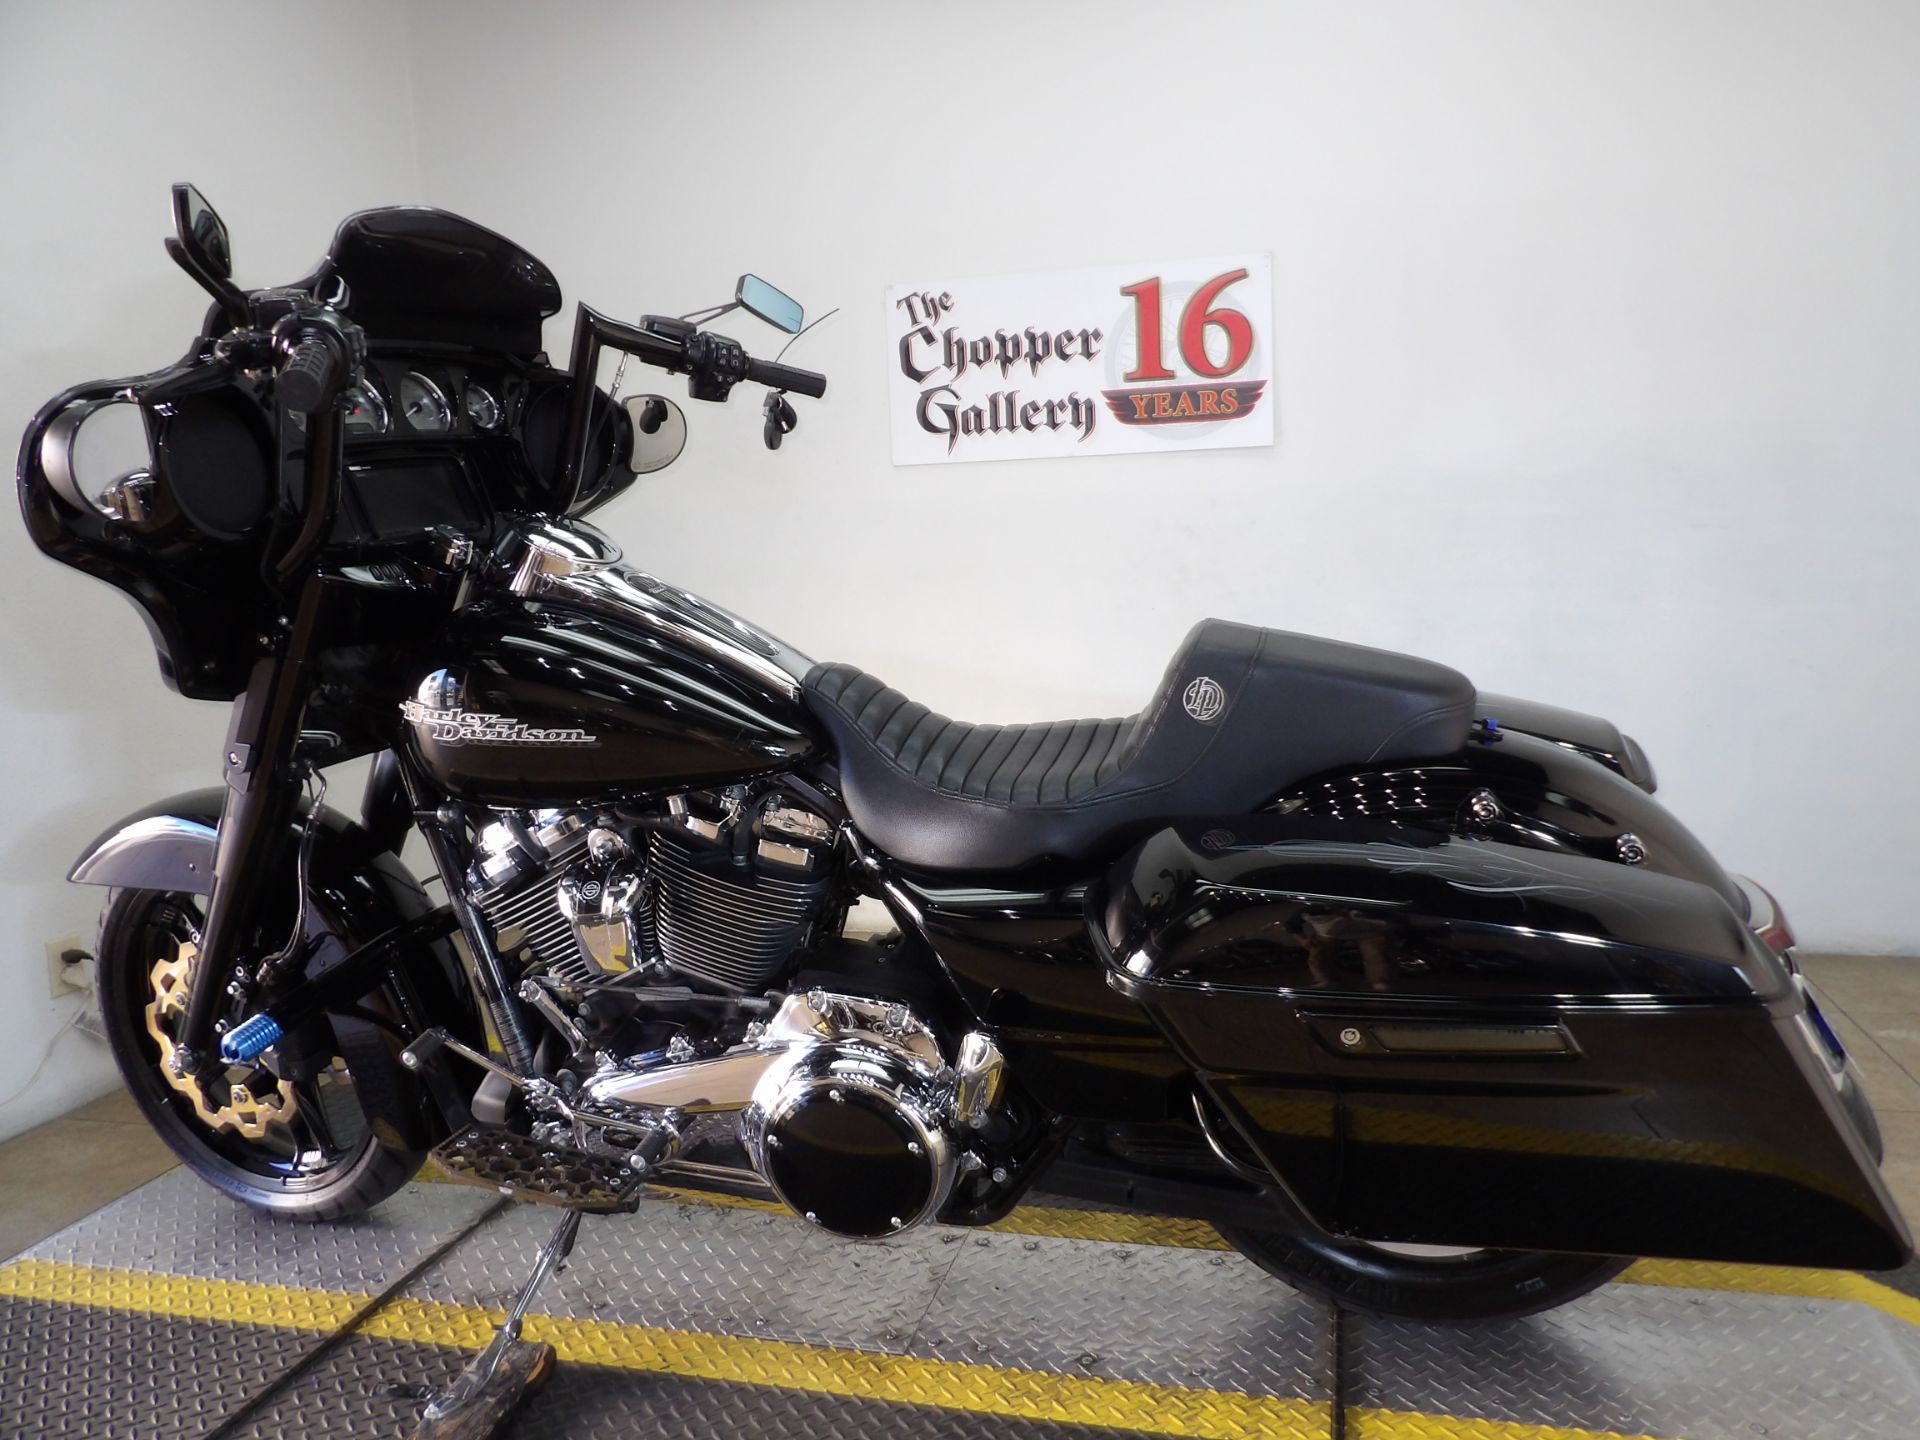 2017 Harley-Davidson Street Glide® Special in Temecula, California - Photo 10